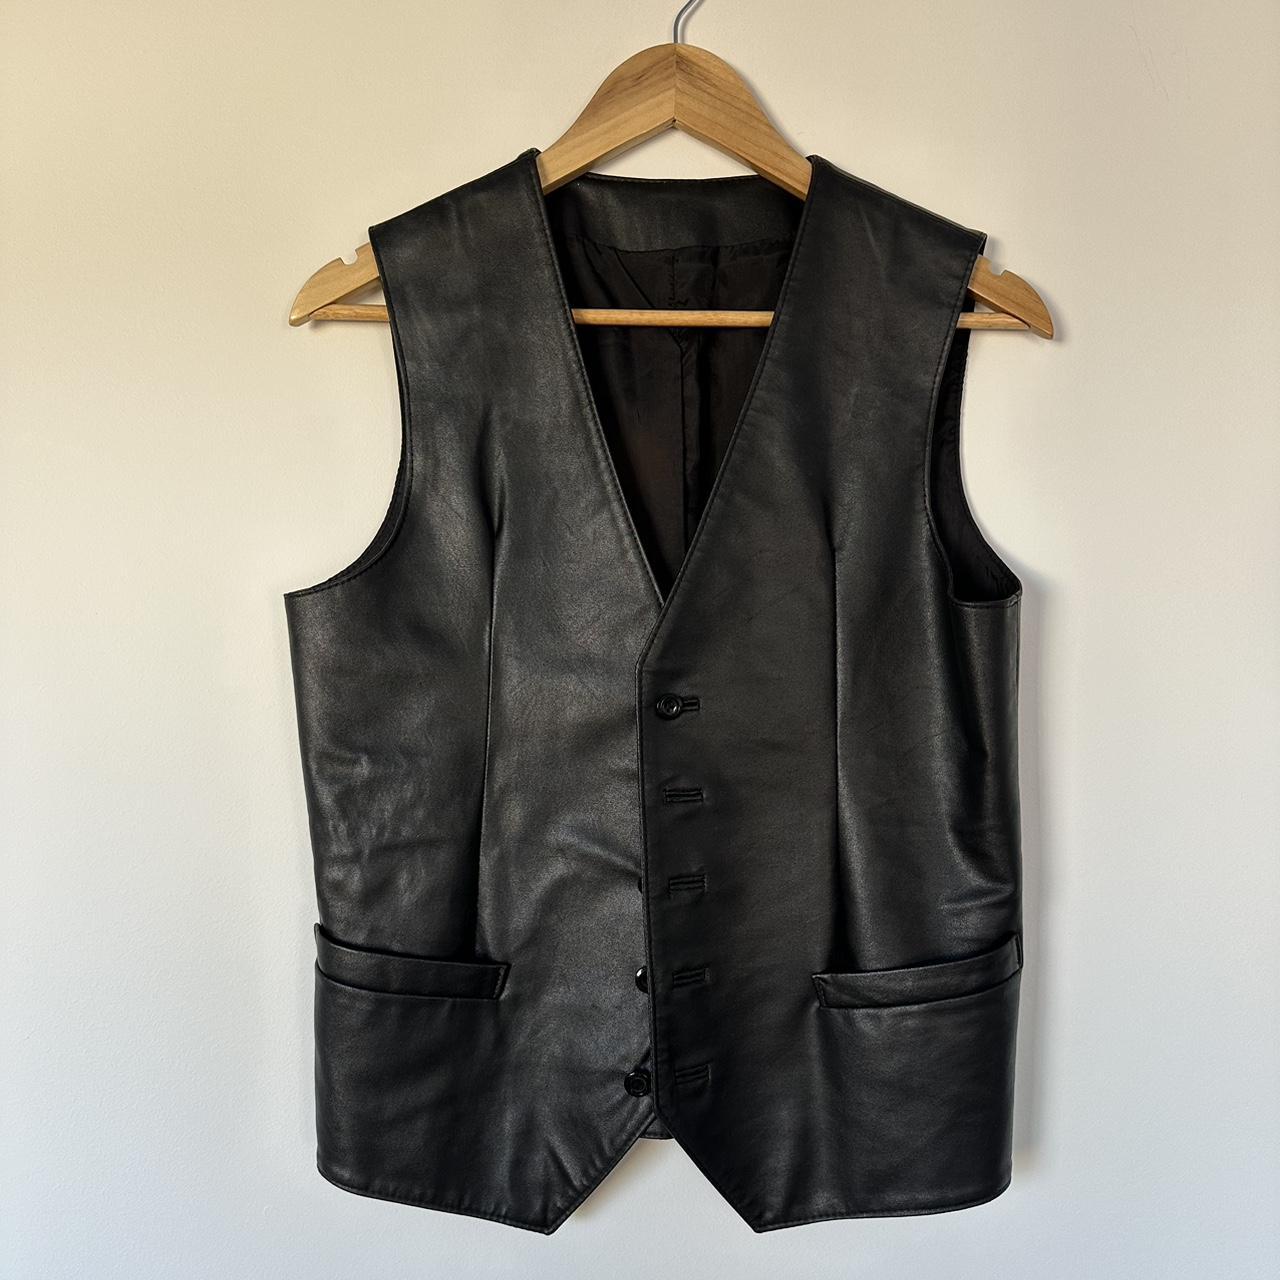 Incredible real leather vintage vest. Fits up to... - Depop